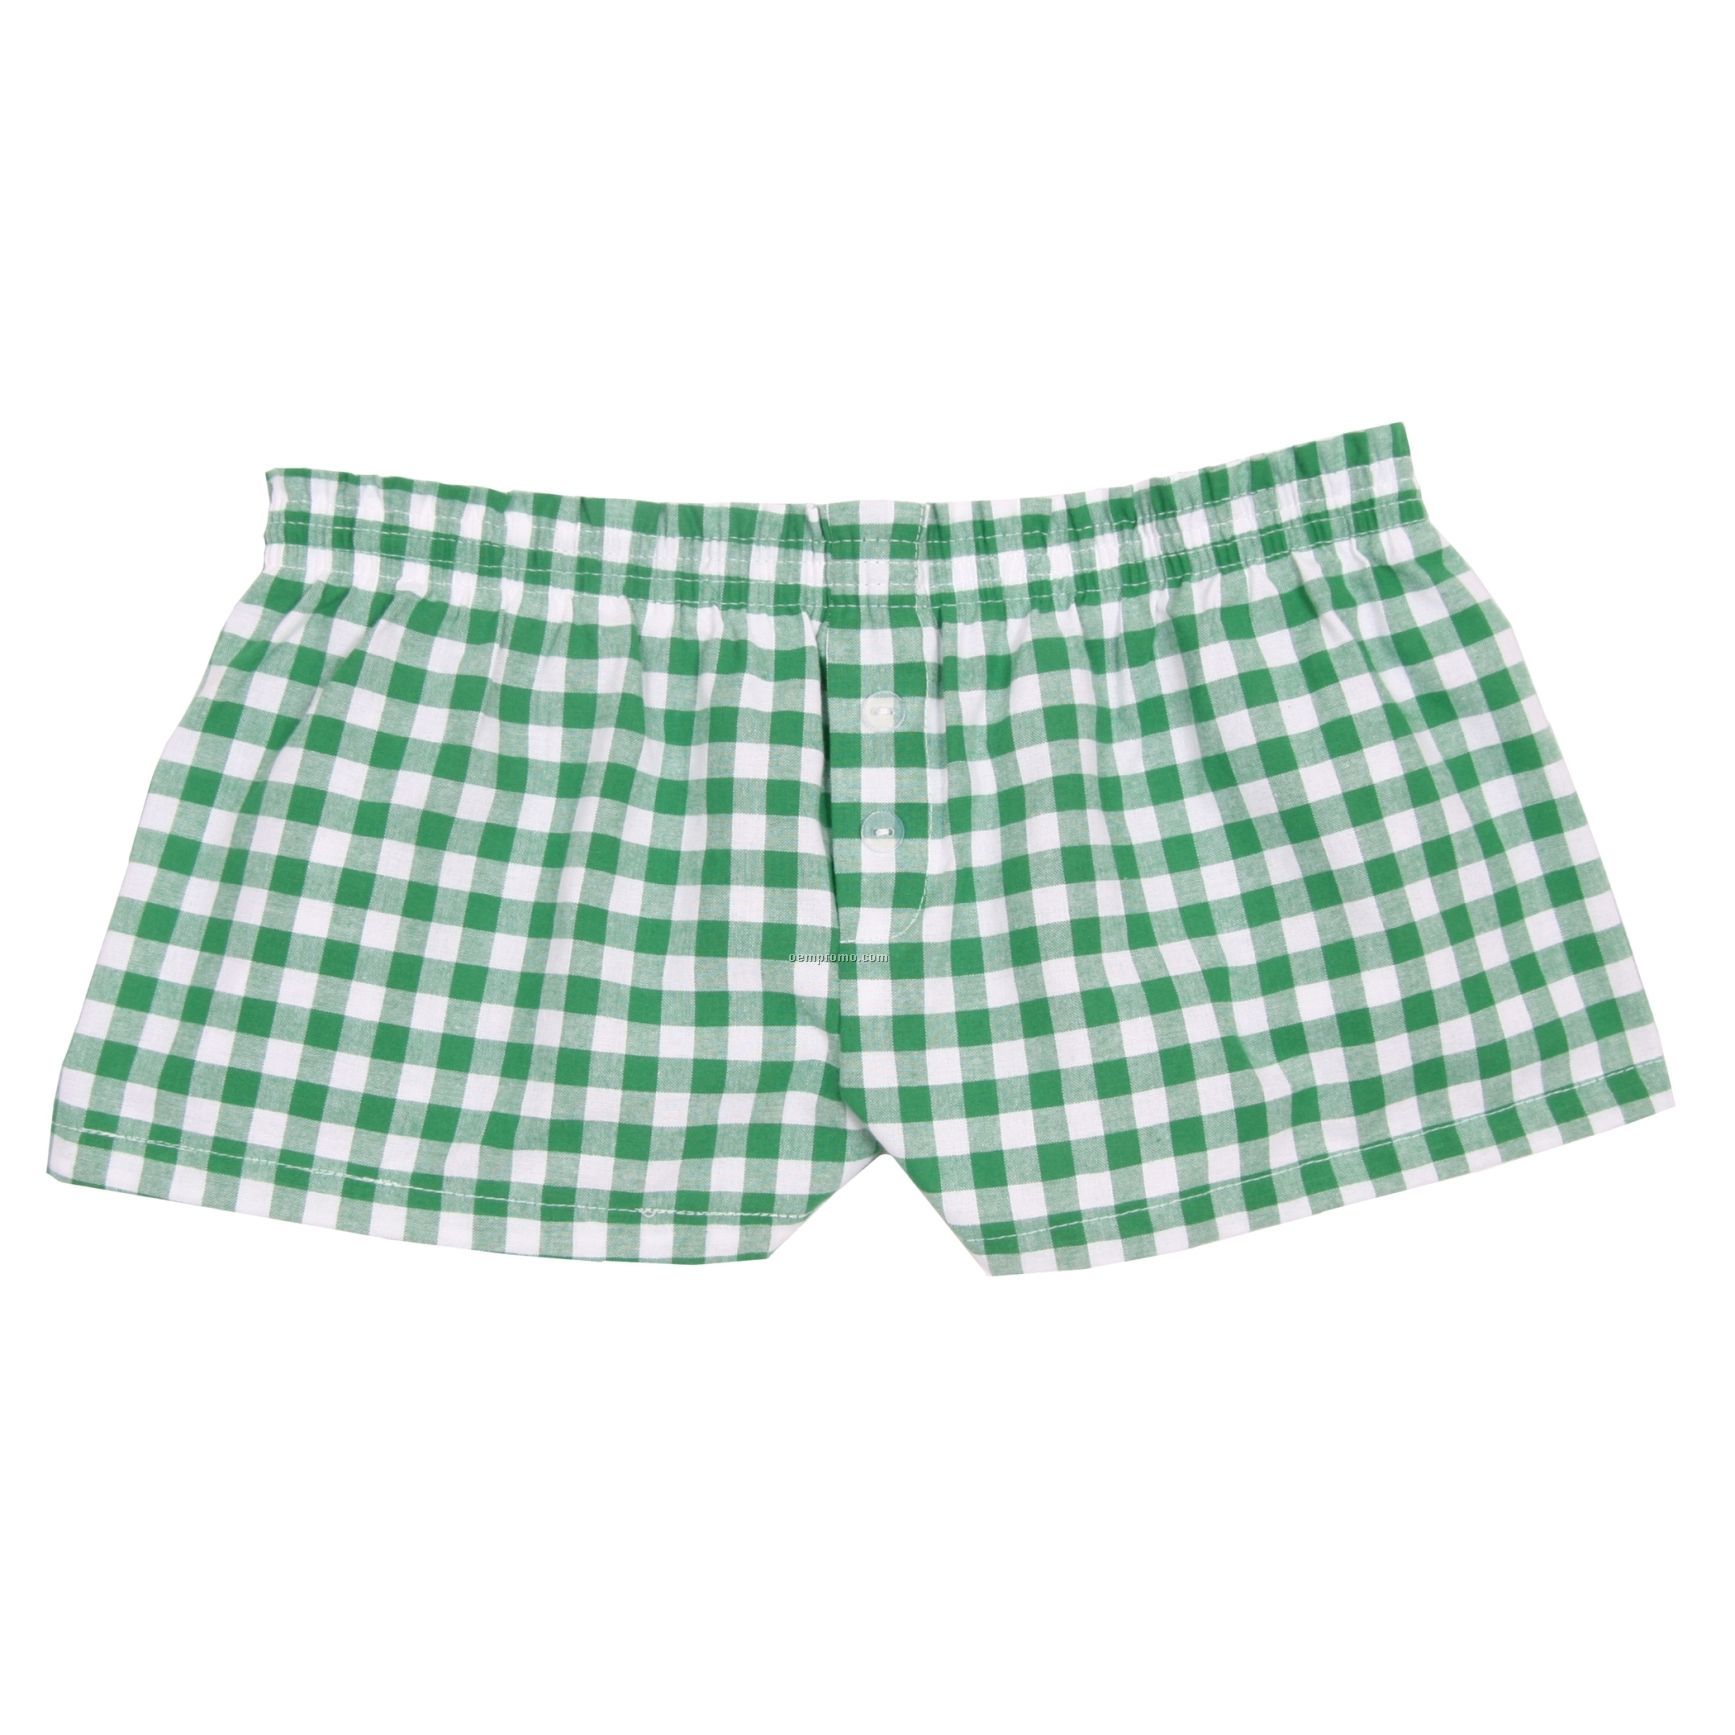 Ladies' Grassy Green Bitty Boxer Short